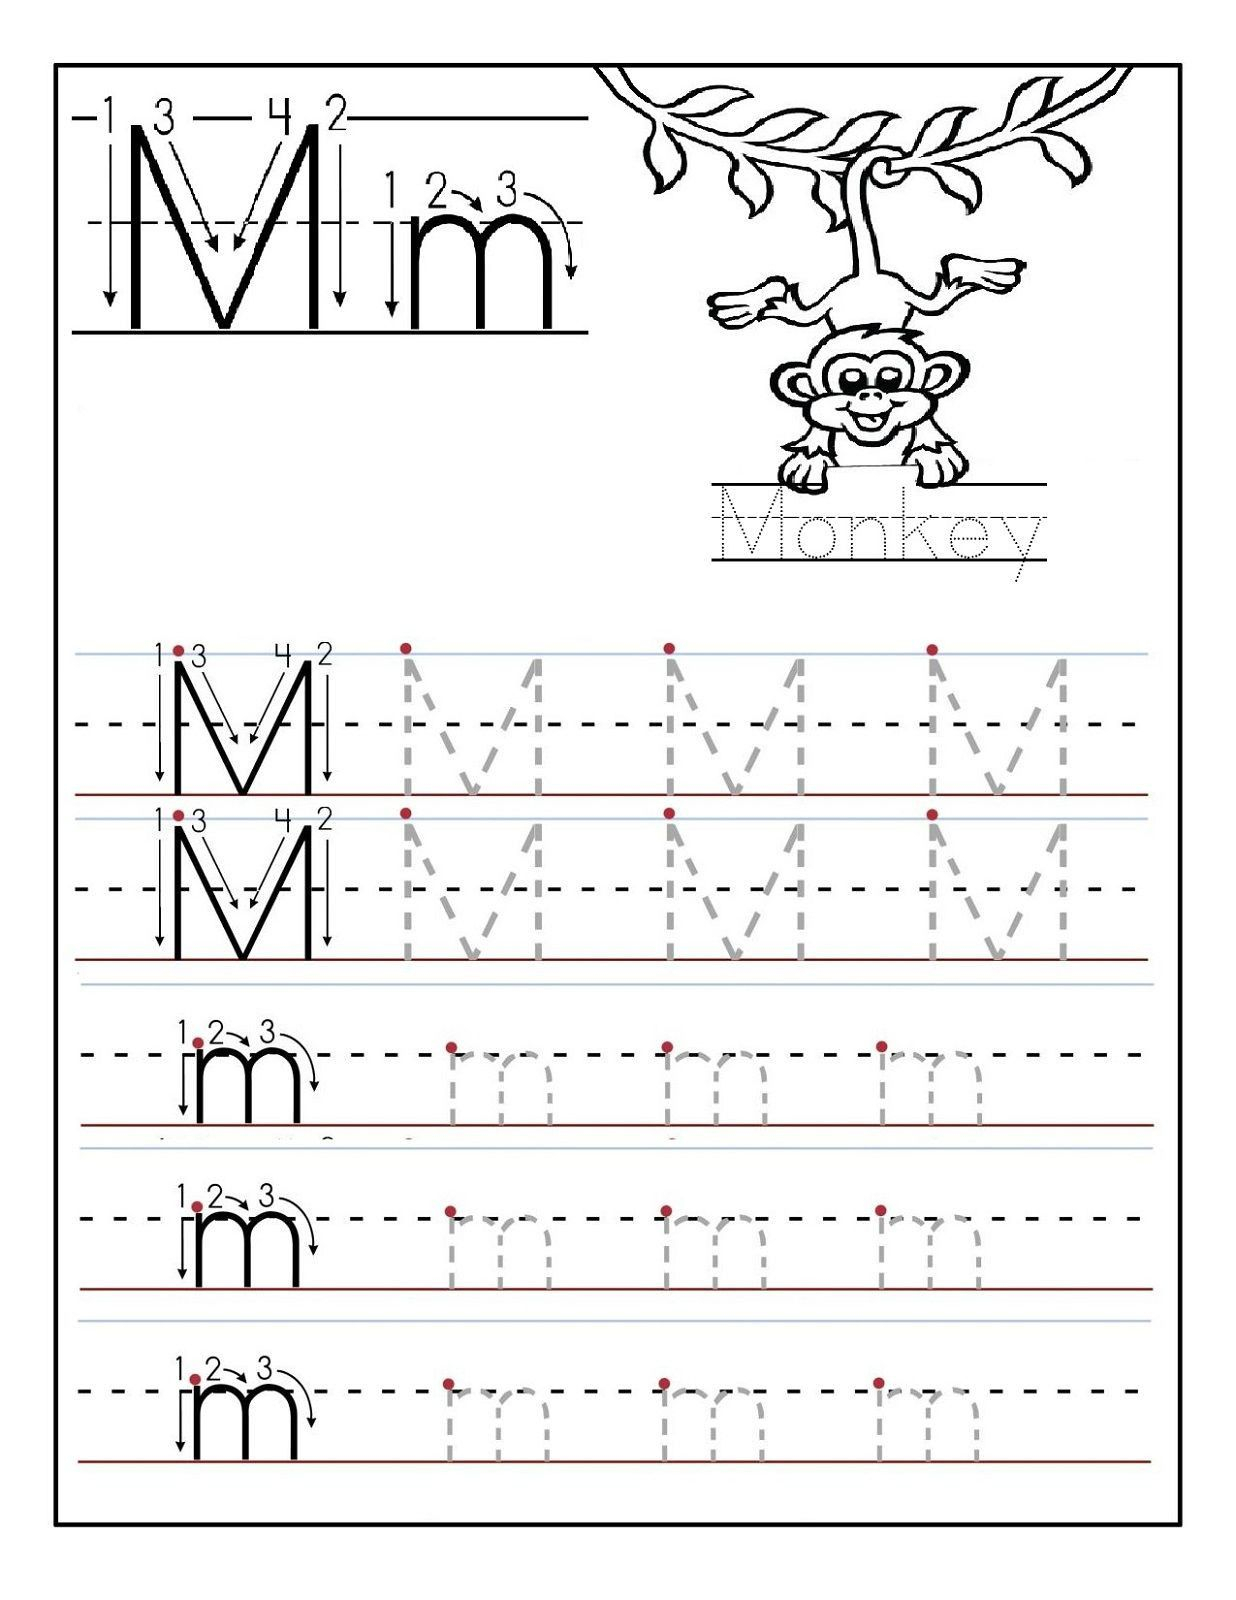 Letter N Tracing Worksheets Preschool AlphabetWorksheetsFree